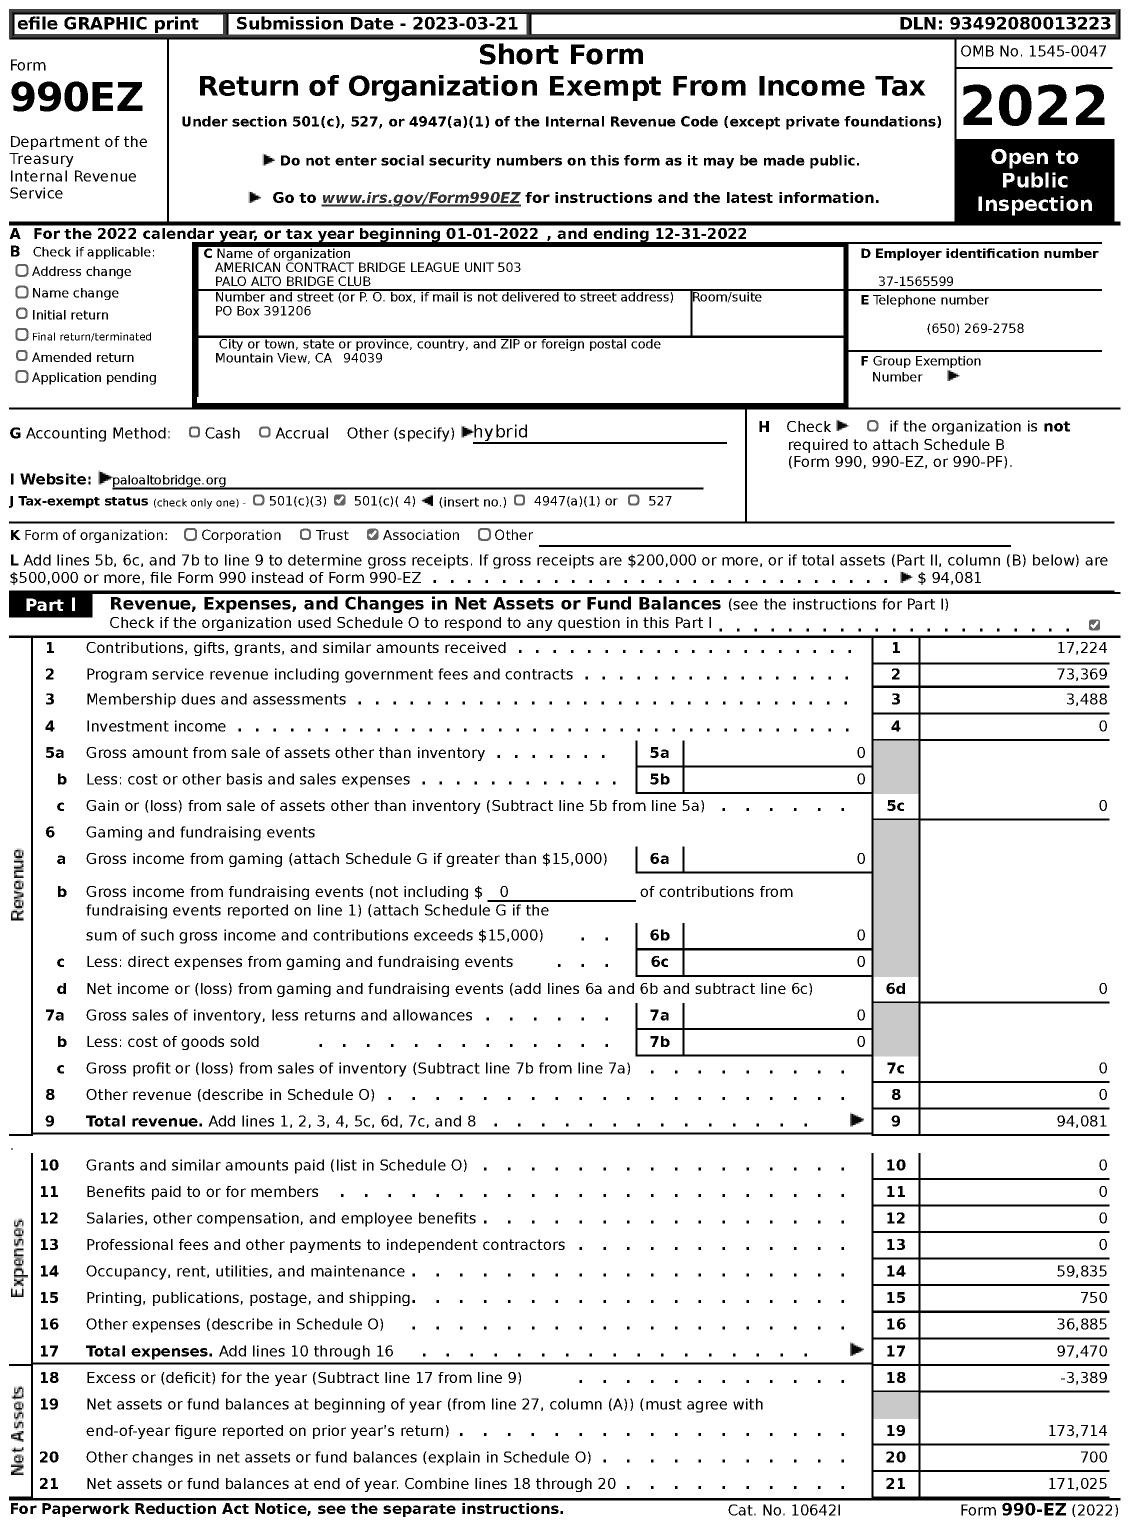 Image of first page of 2022 Form 990EZ for AMERICAN CONTRACT BRIDGE LEAGUE UNIT 503 - 503 Palo Alto UNIT